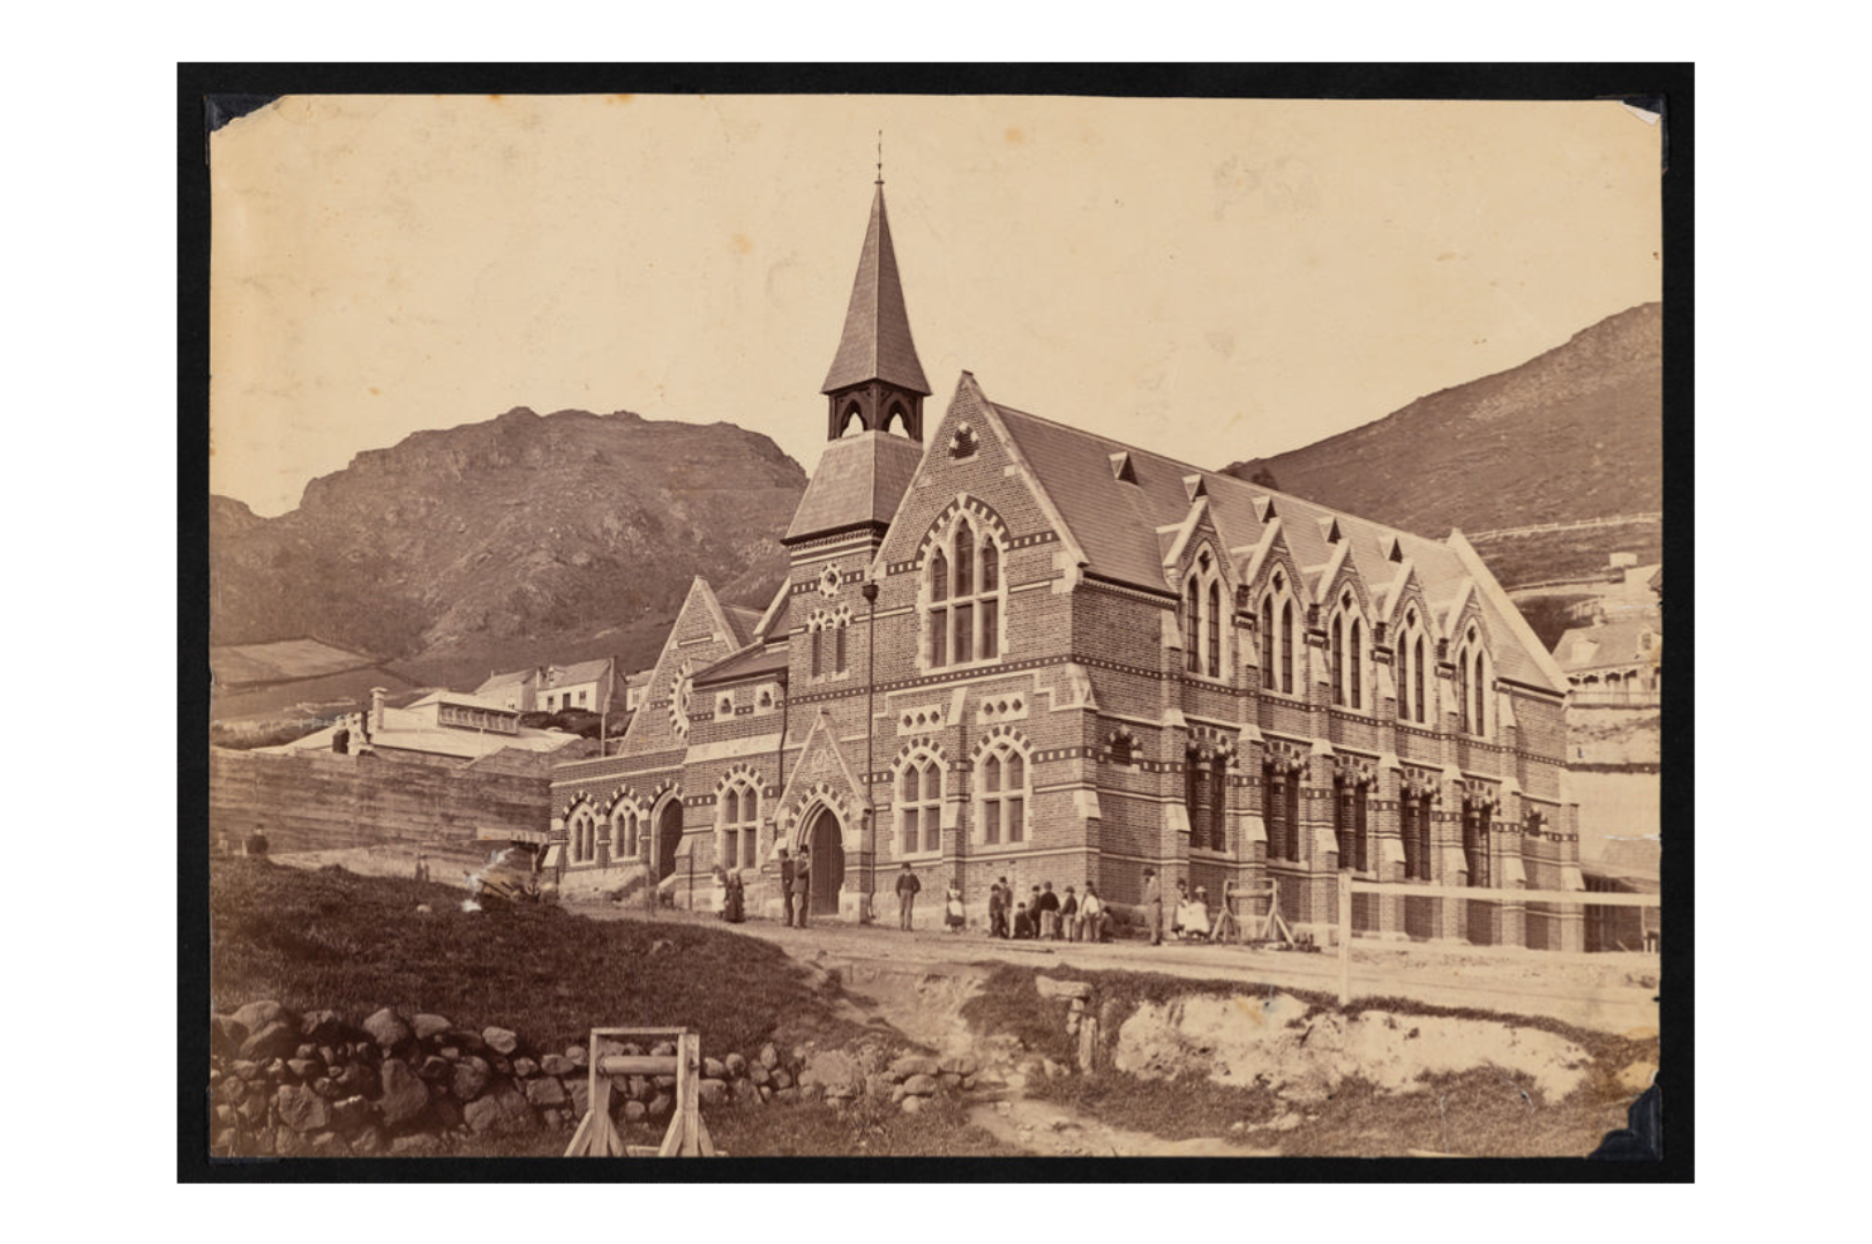 The Lyttelton Borough School 1874